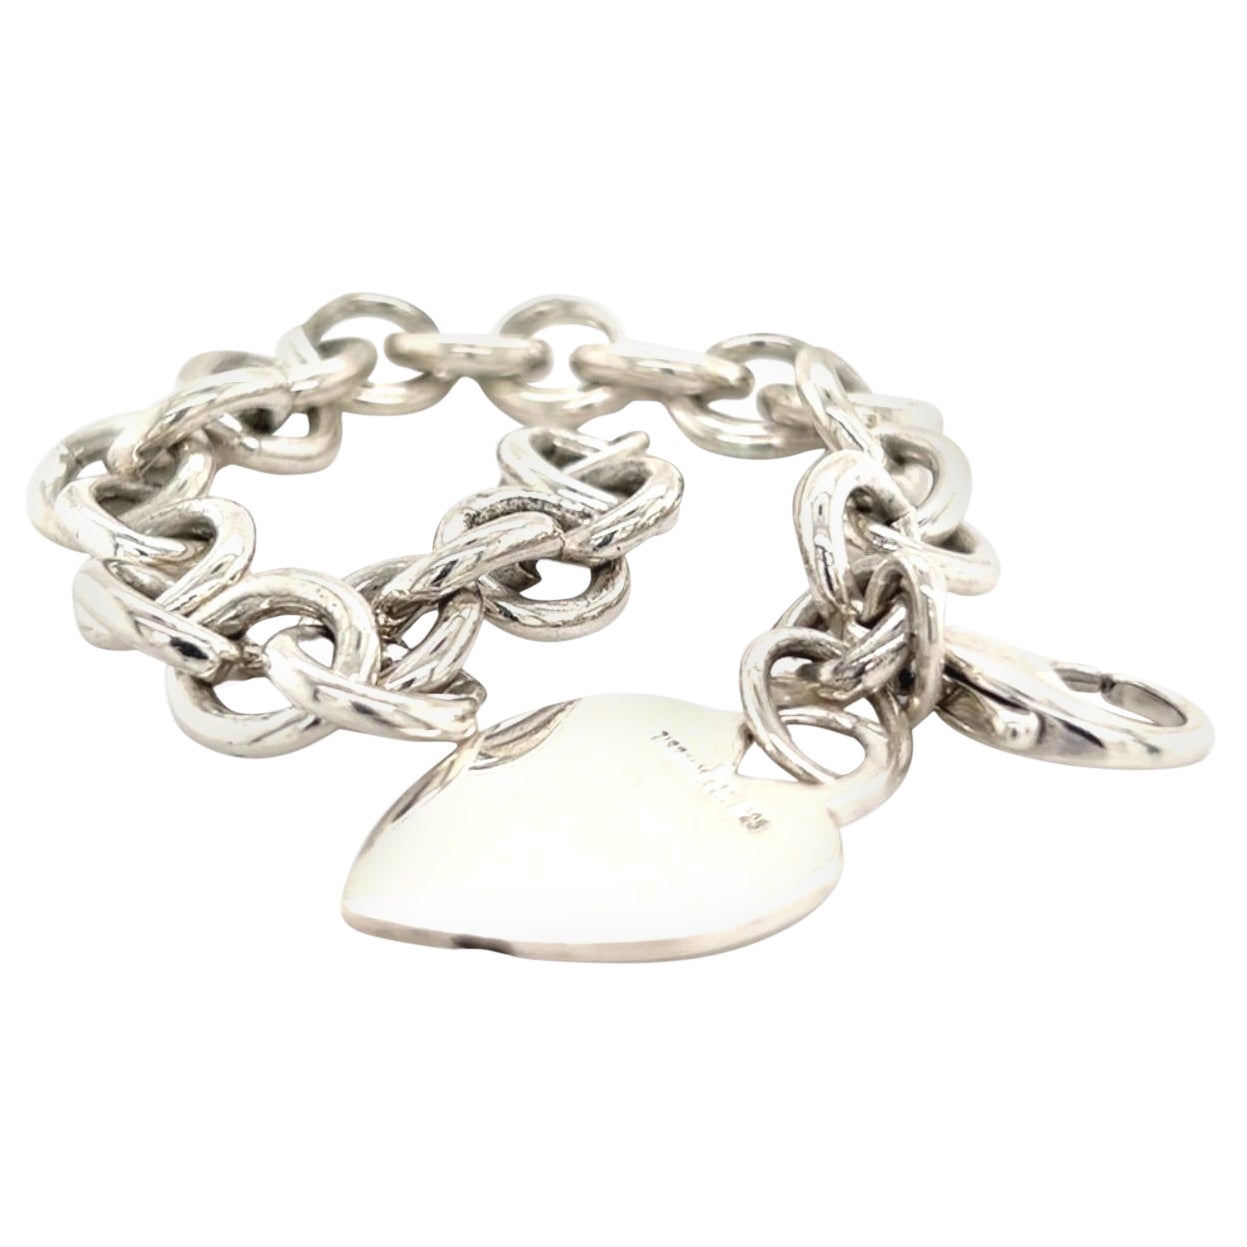 Tiffany & Co Estate Heart Charm Bracelet Sterling Silver 36 Grams